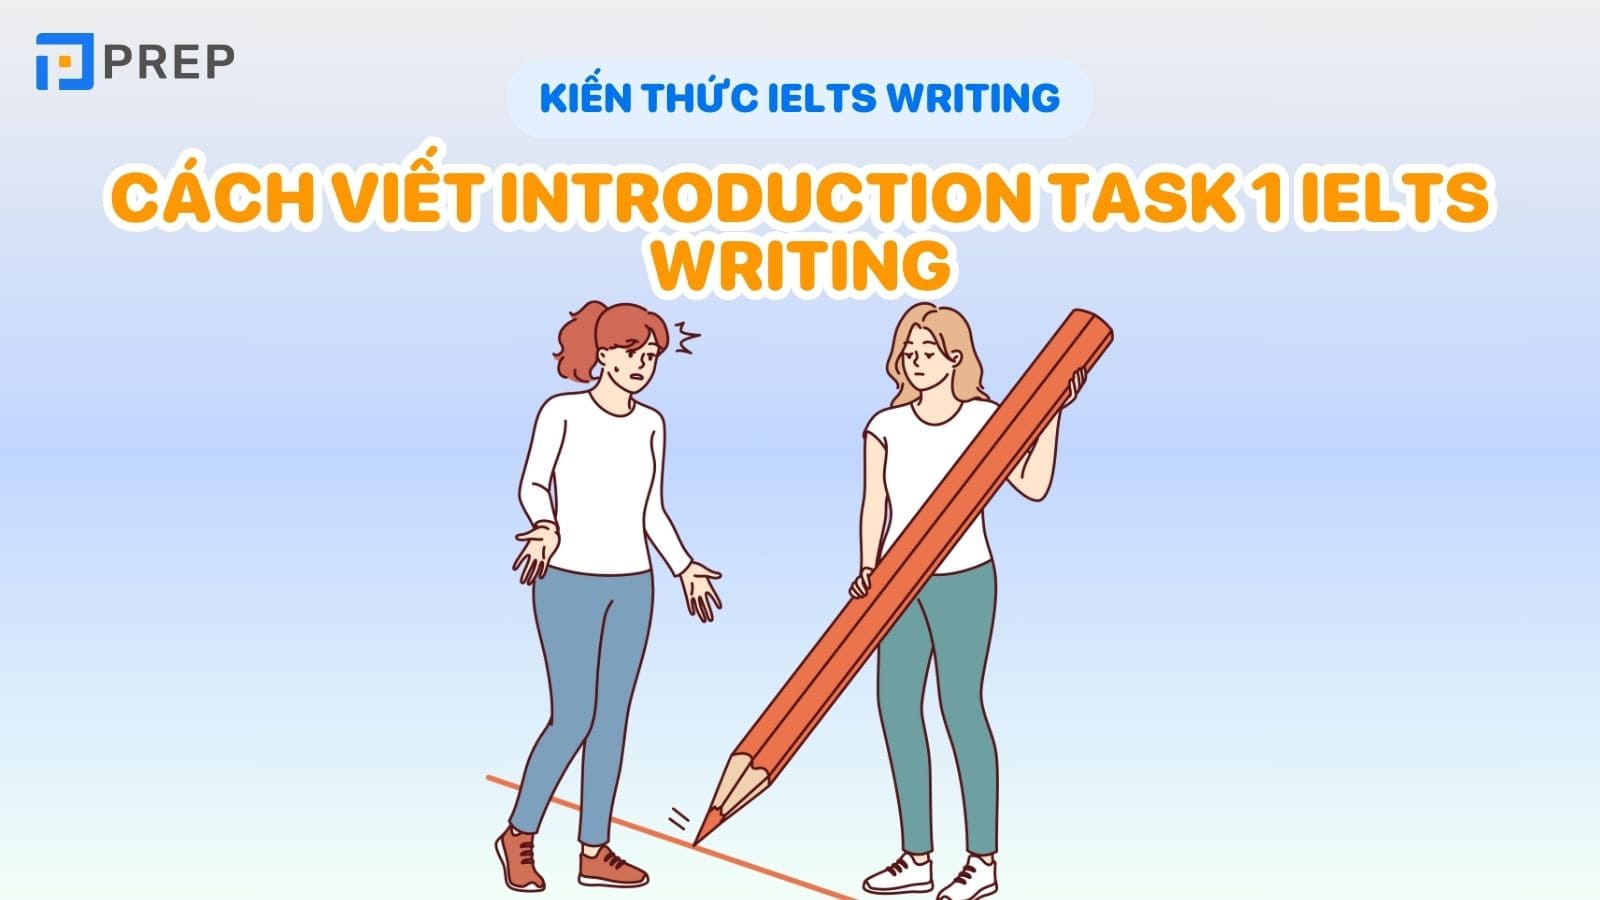 cach-viet-introduction-task-1-ielts-writing.jpg